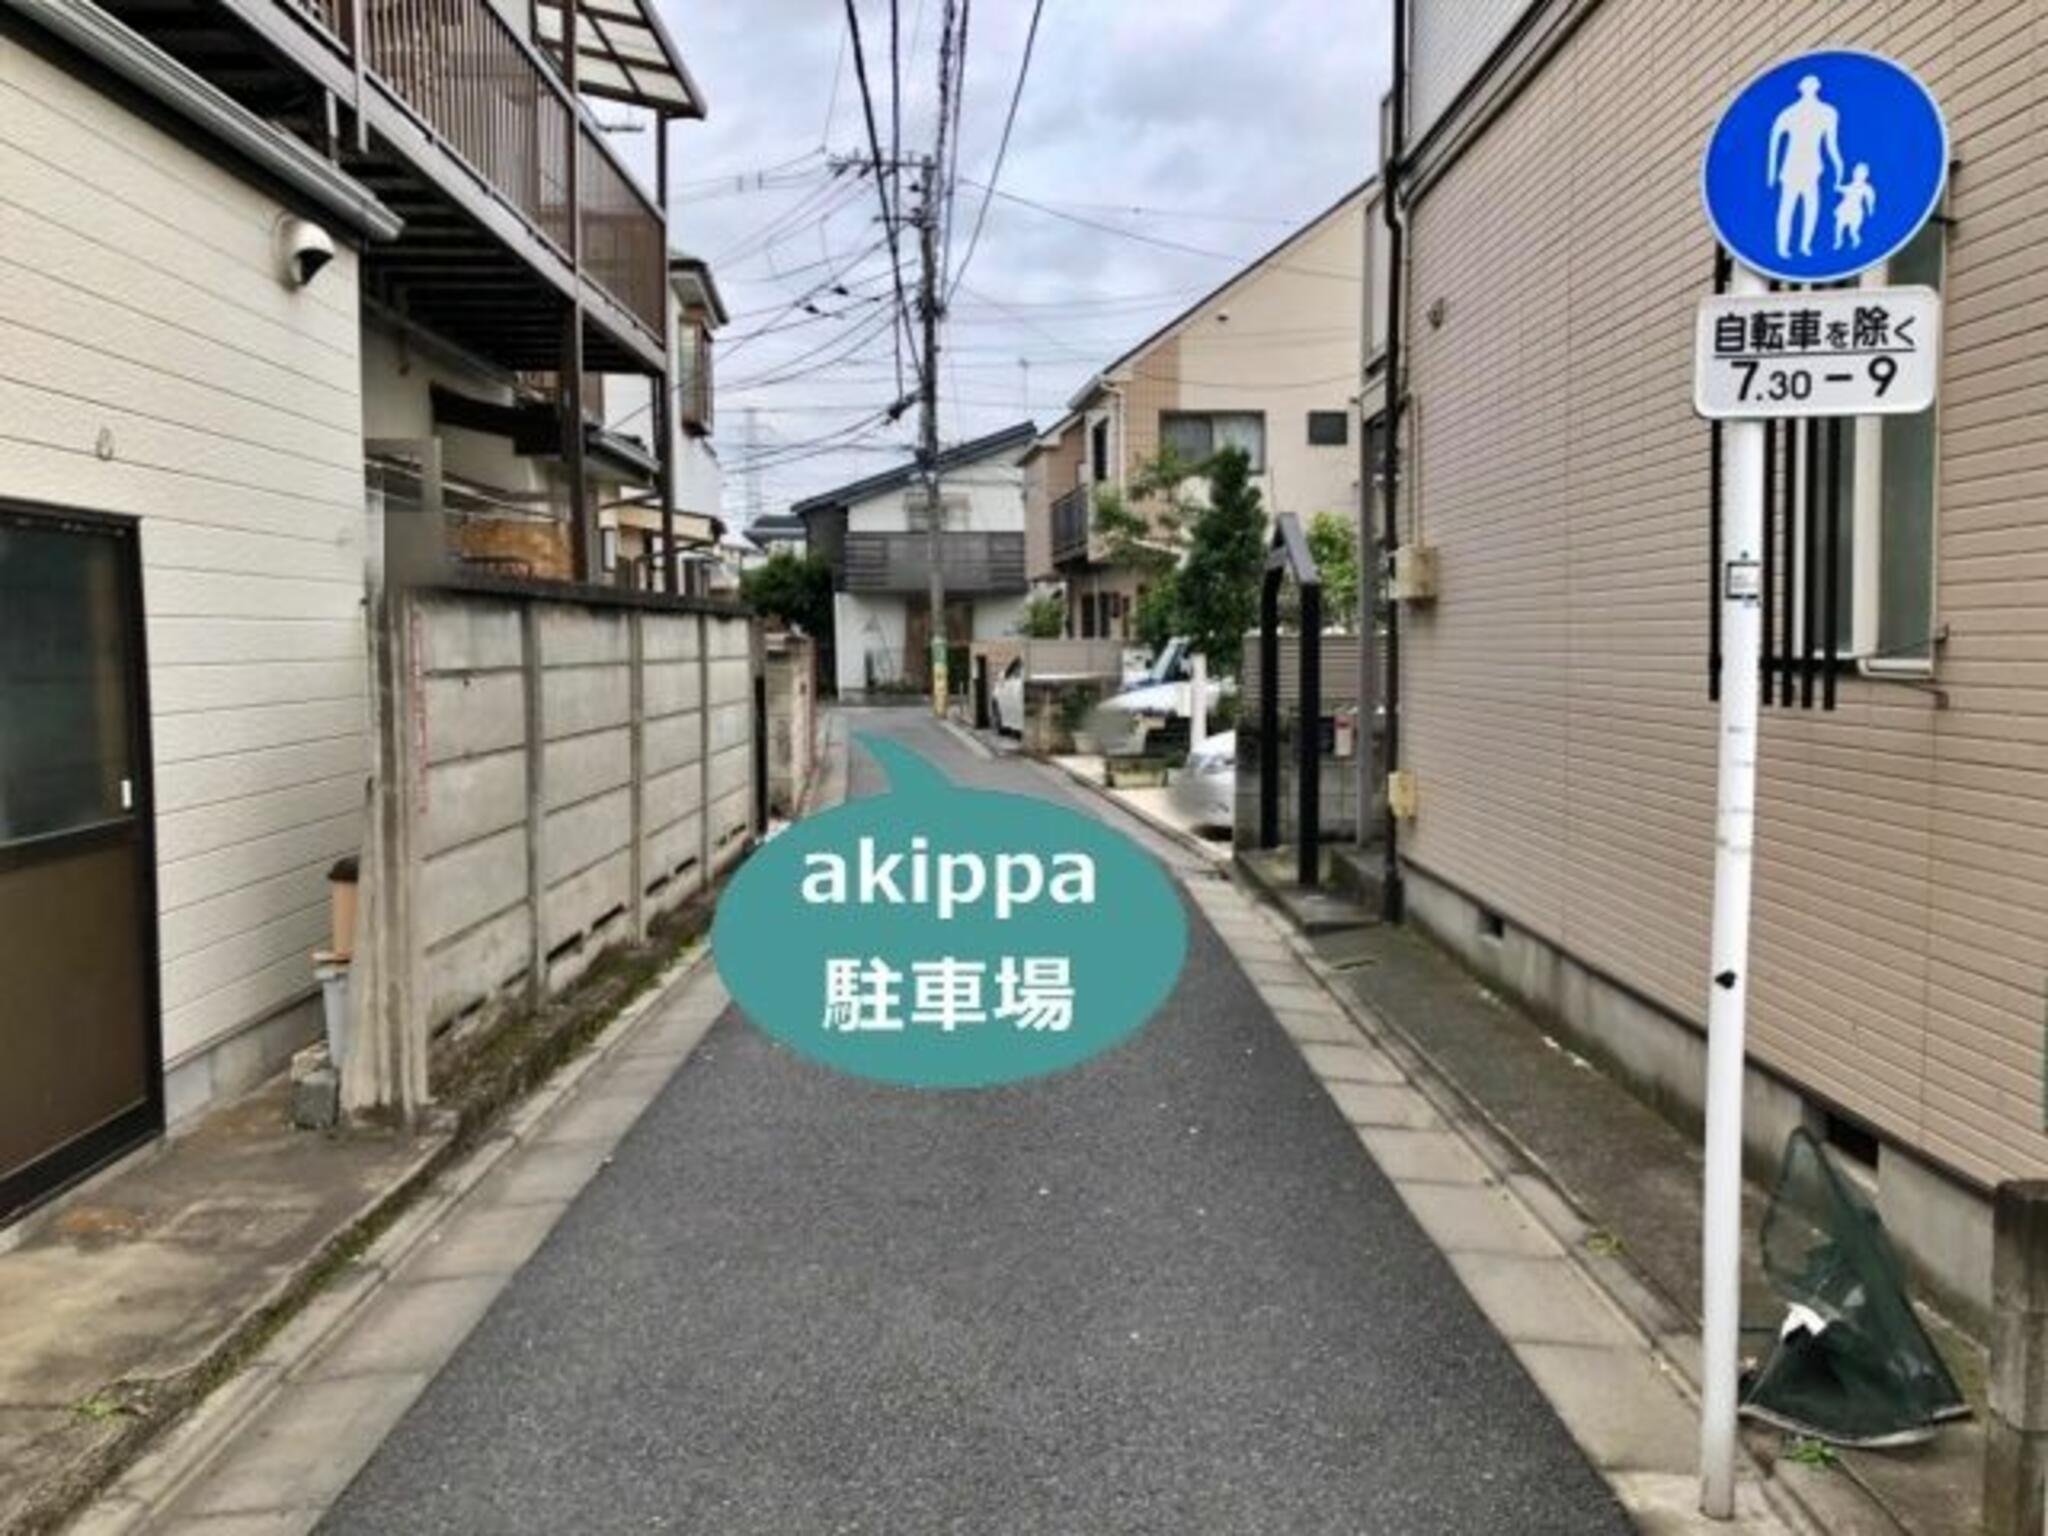 akippa駐車場:東京都杉並区上高井戸1丁目29-22の代表写真3